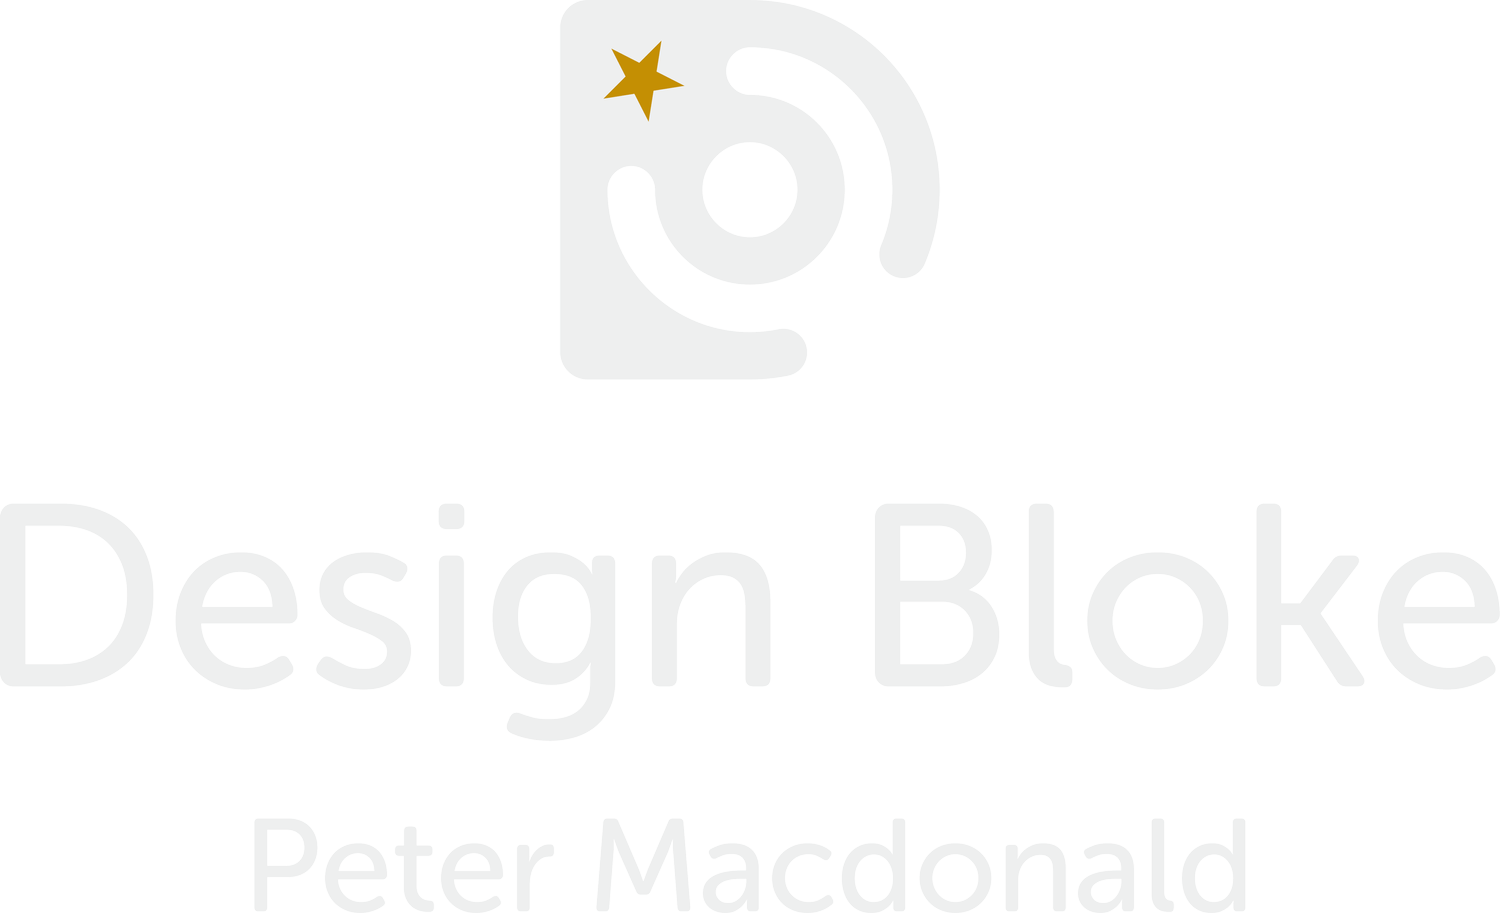 Design Bloke - Freelance Graphic Designer